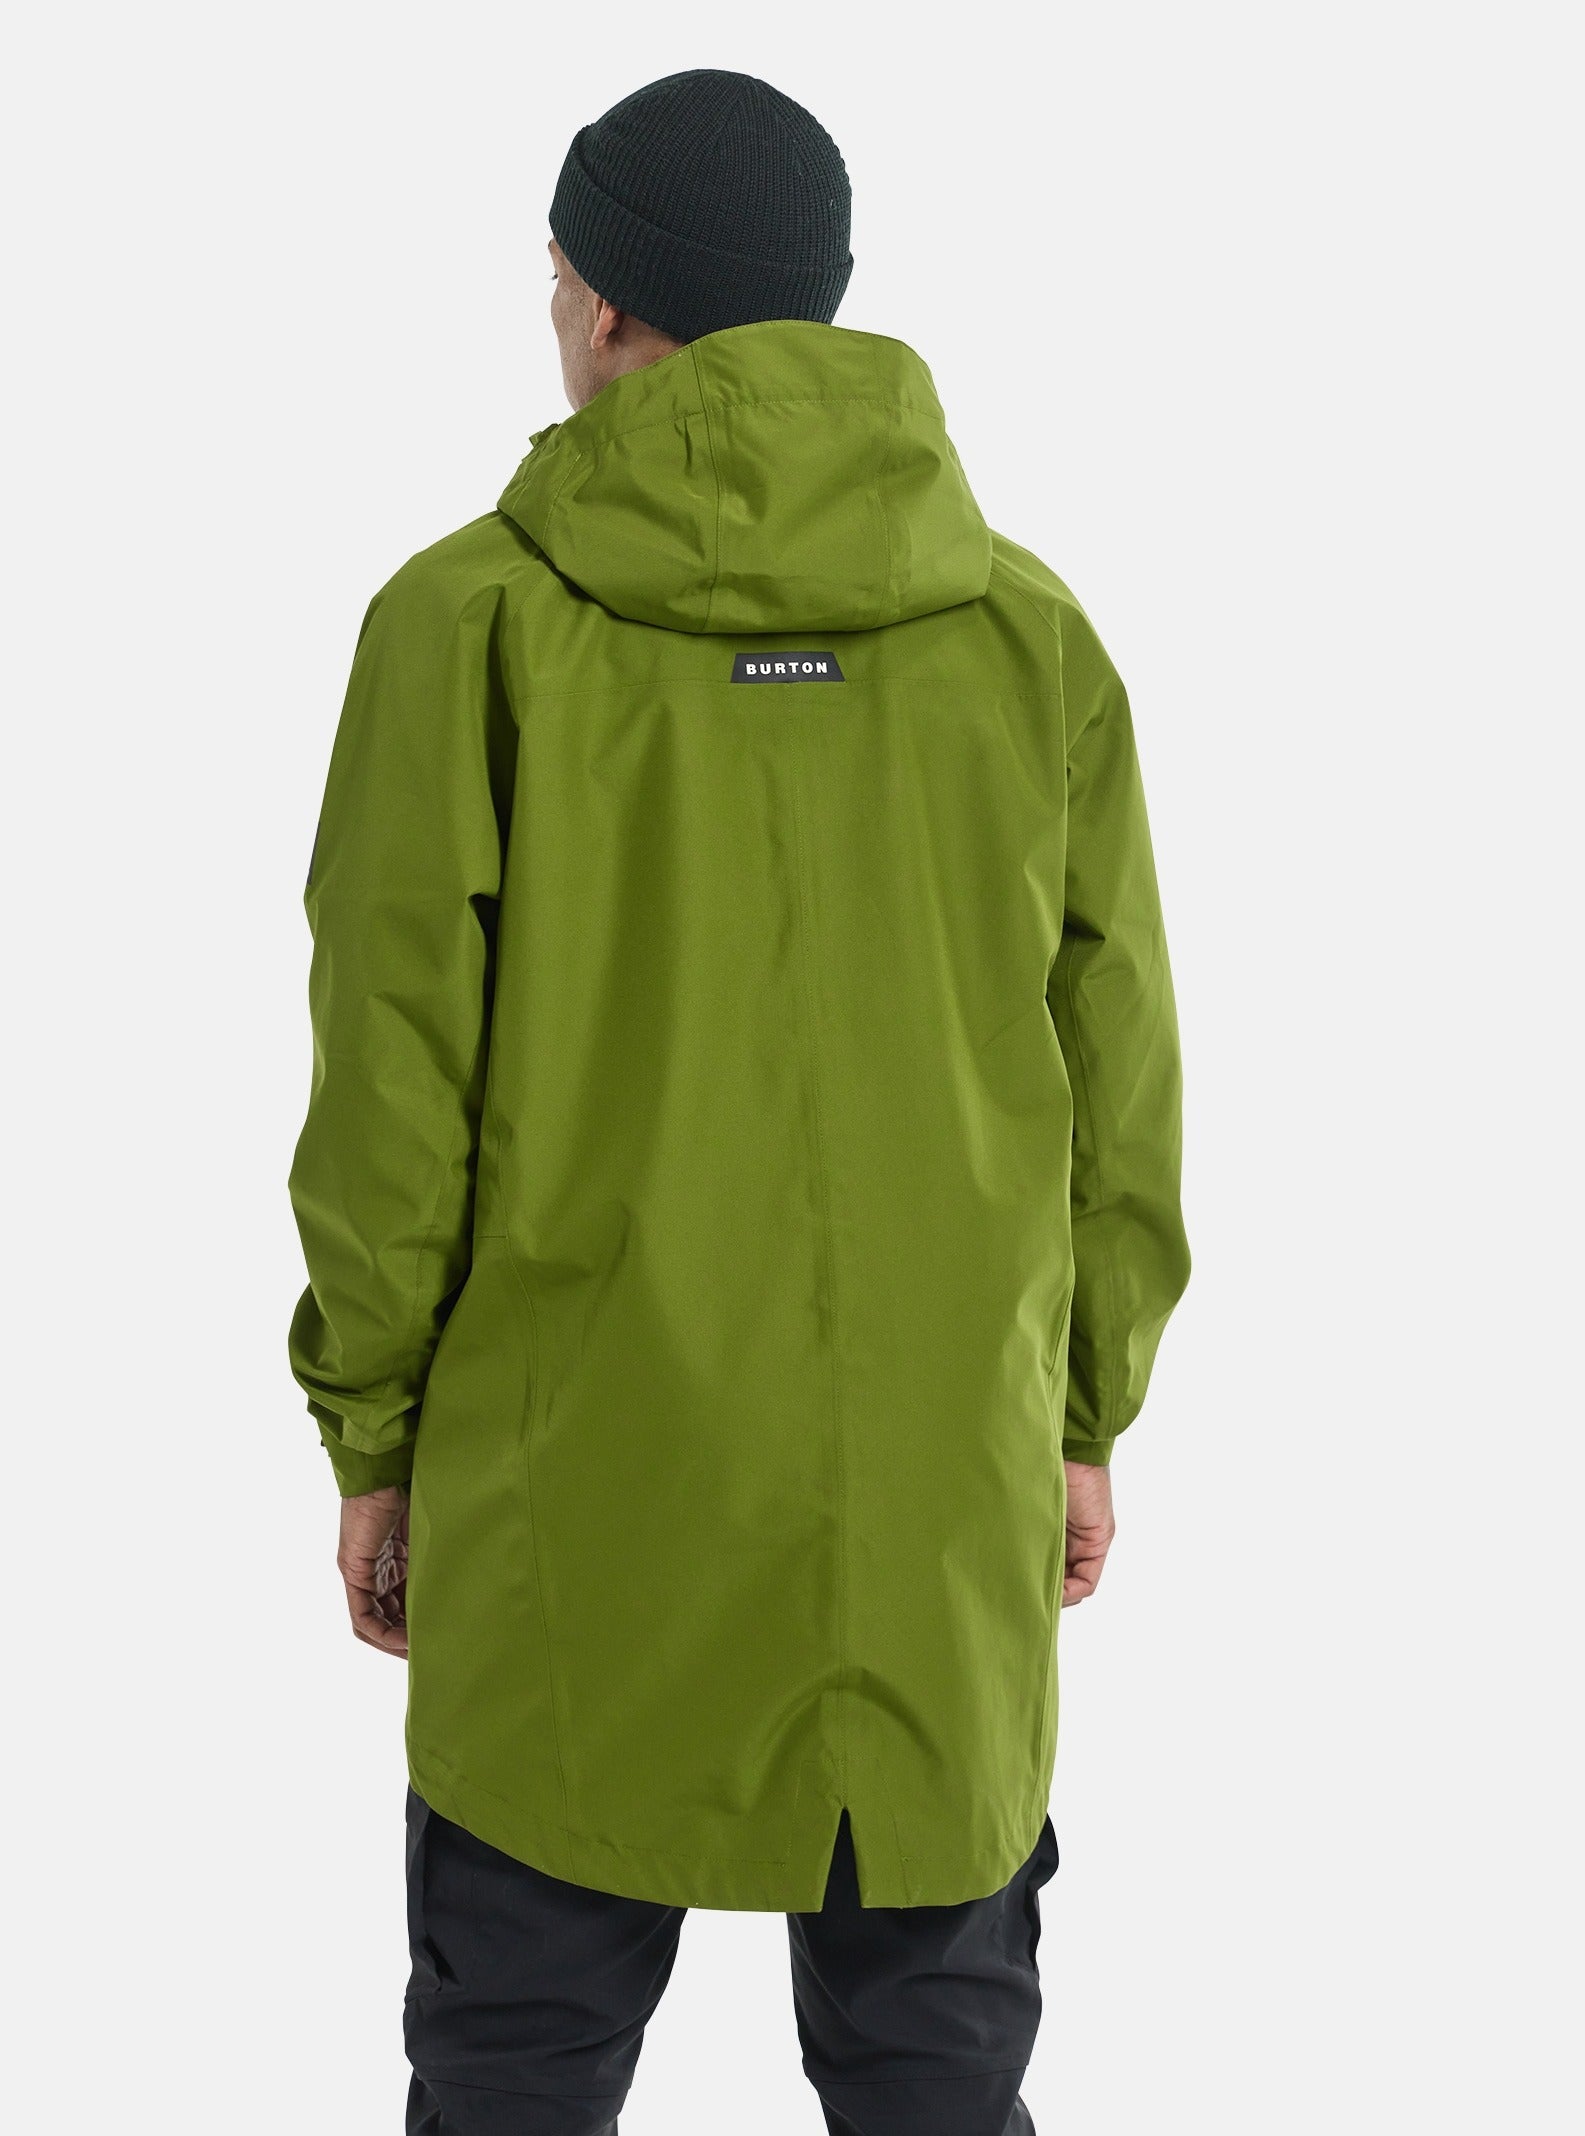 Men's Veridry 2L Rain Jacket